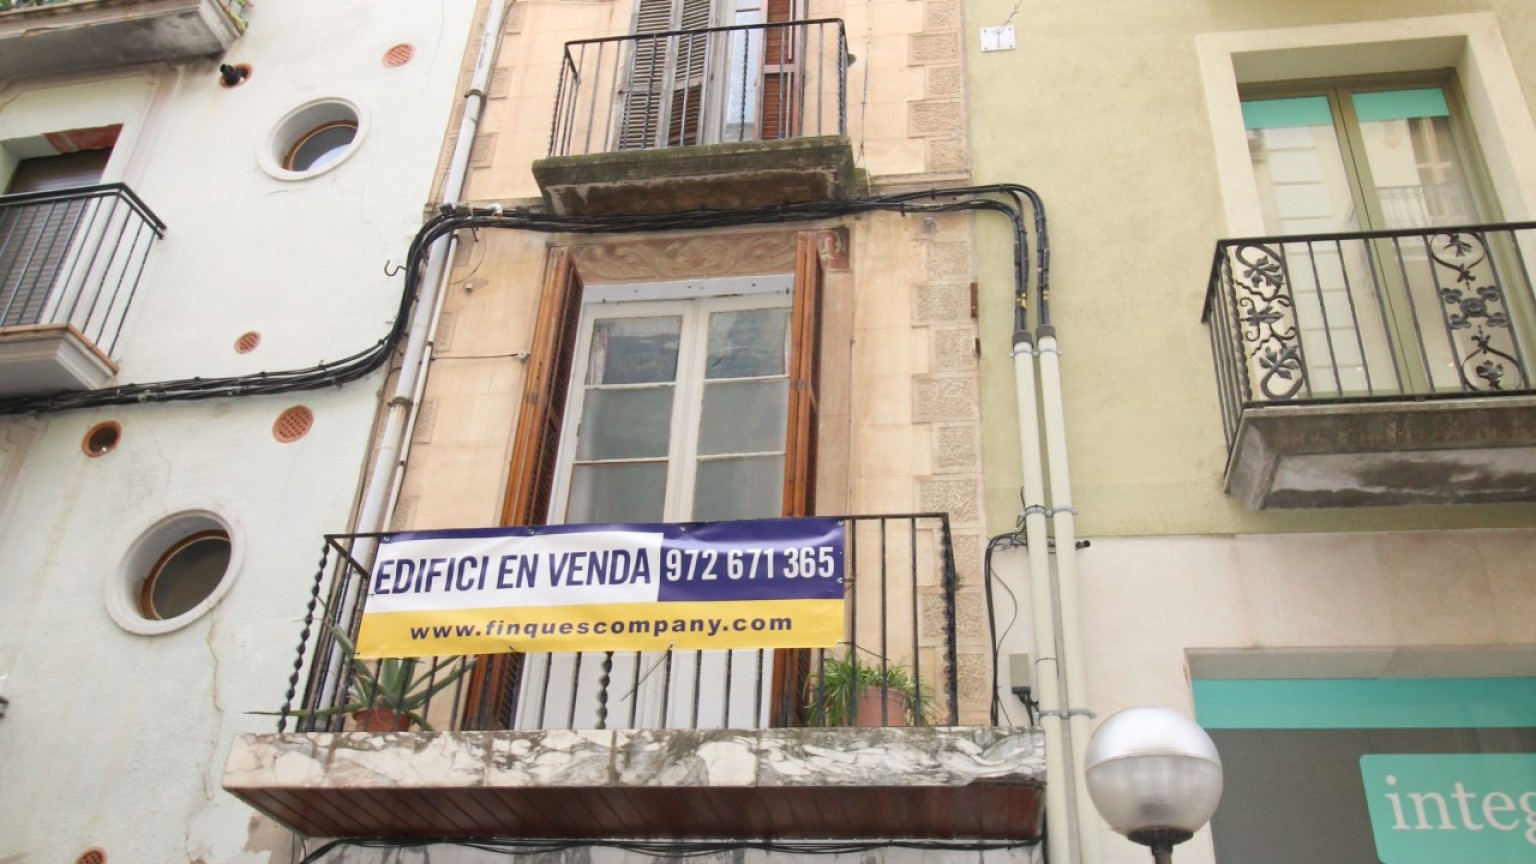 Edifici en venda, de planta baixa i tres pisos en el centre de Figueres.